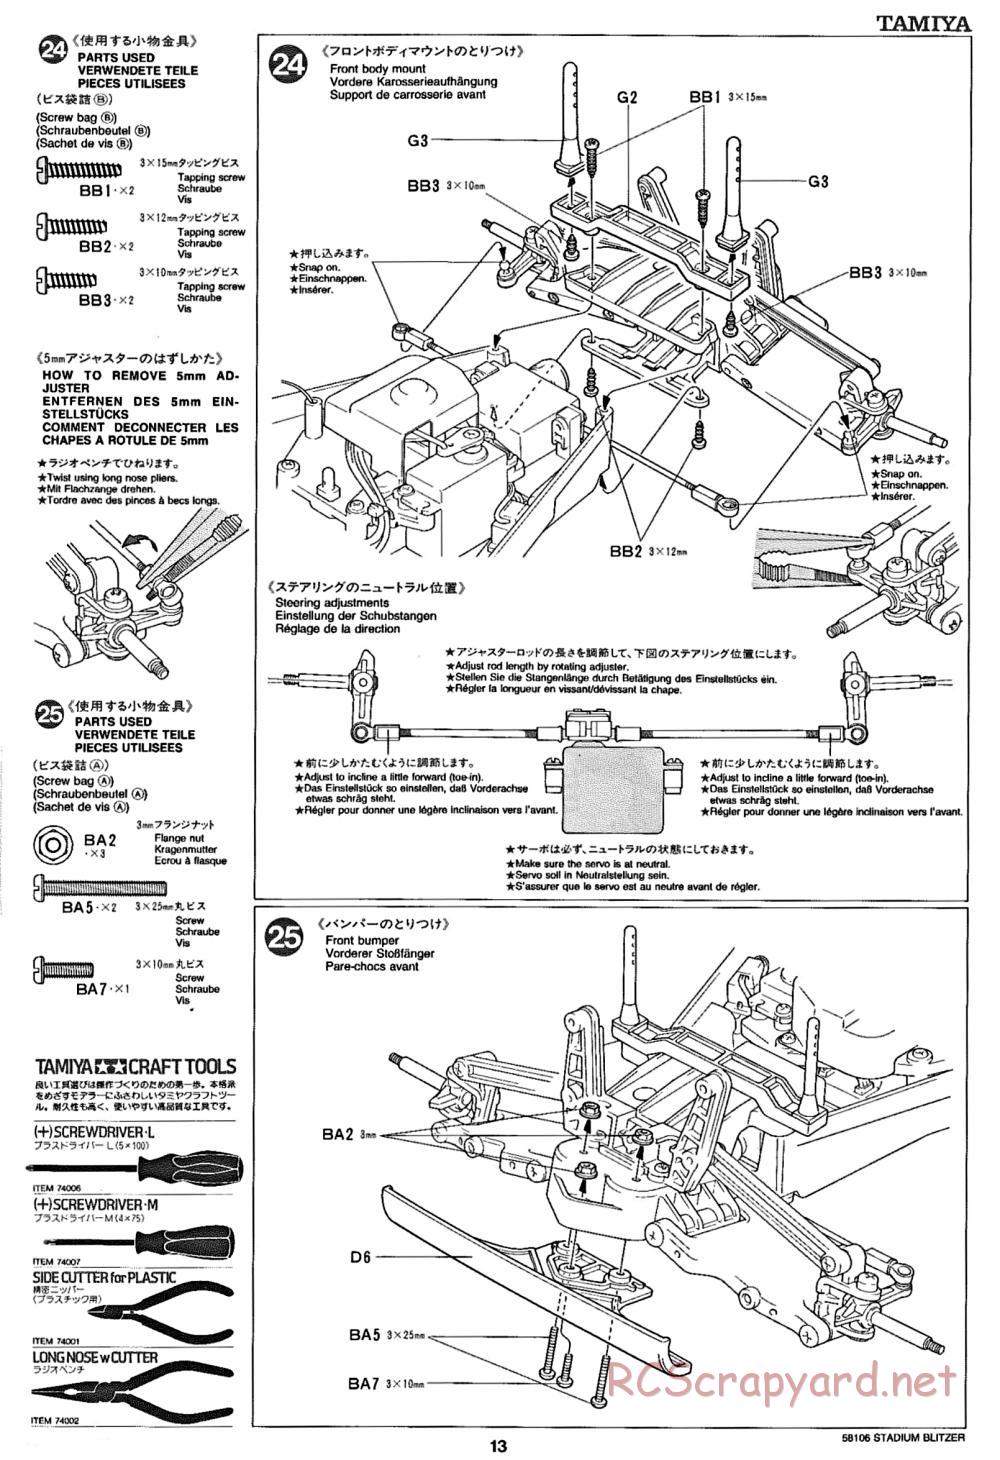 Tamiya - Stadium Blitzer Chassis - Manual - Page 13